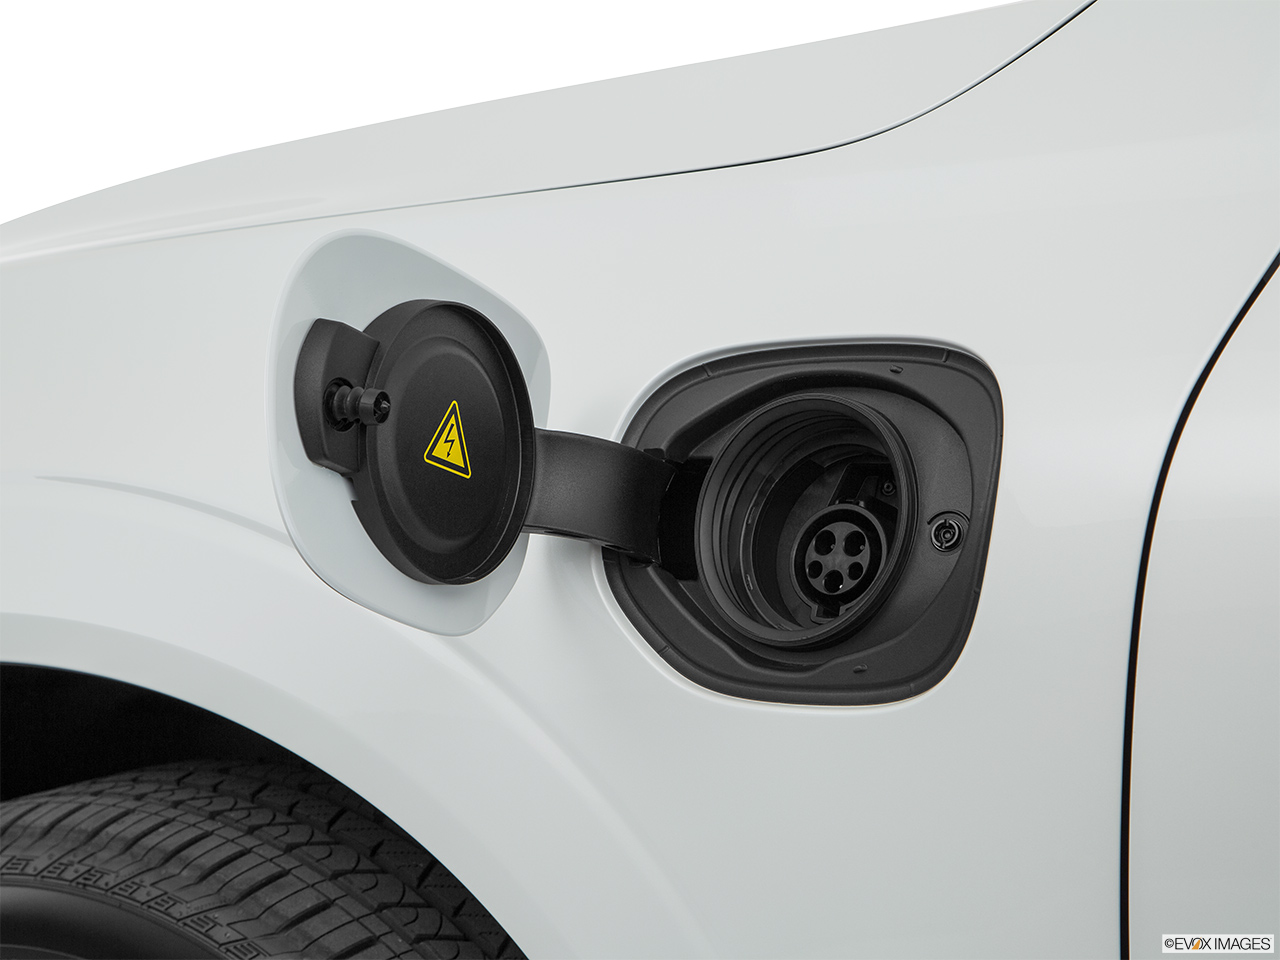 2019 Volvo XC60 T8 Inscription eAWD Plug-in Hybrid Exterior Bonus Shots (no set spec) 